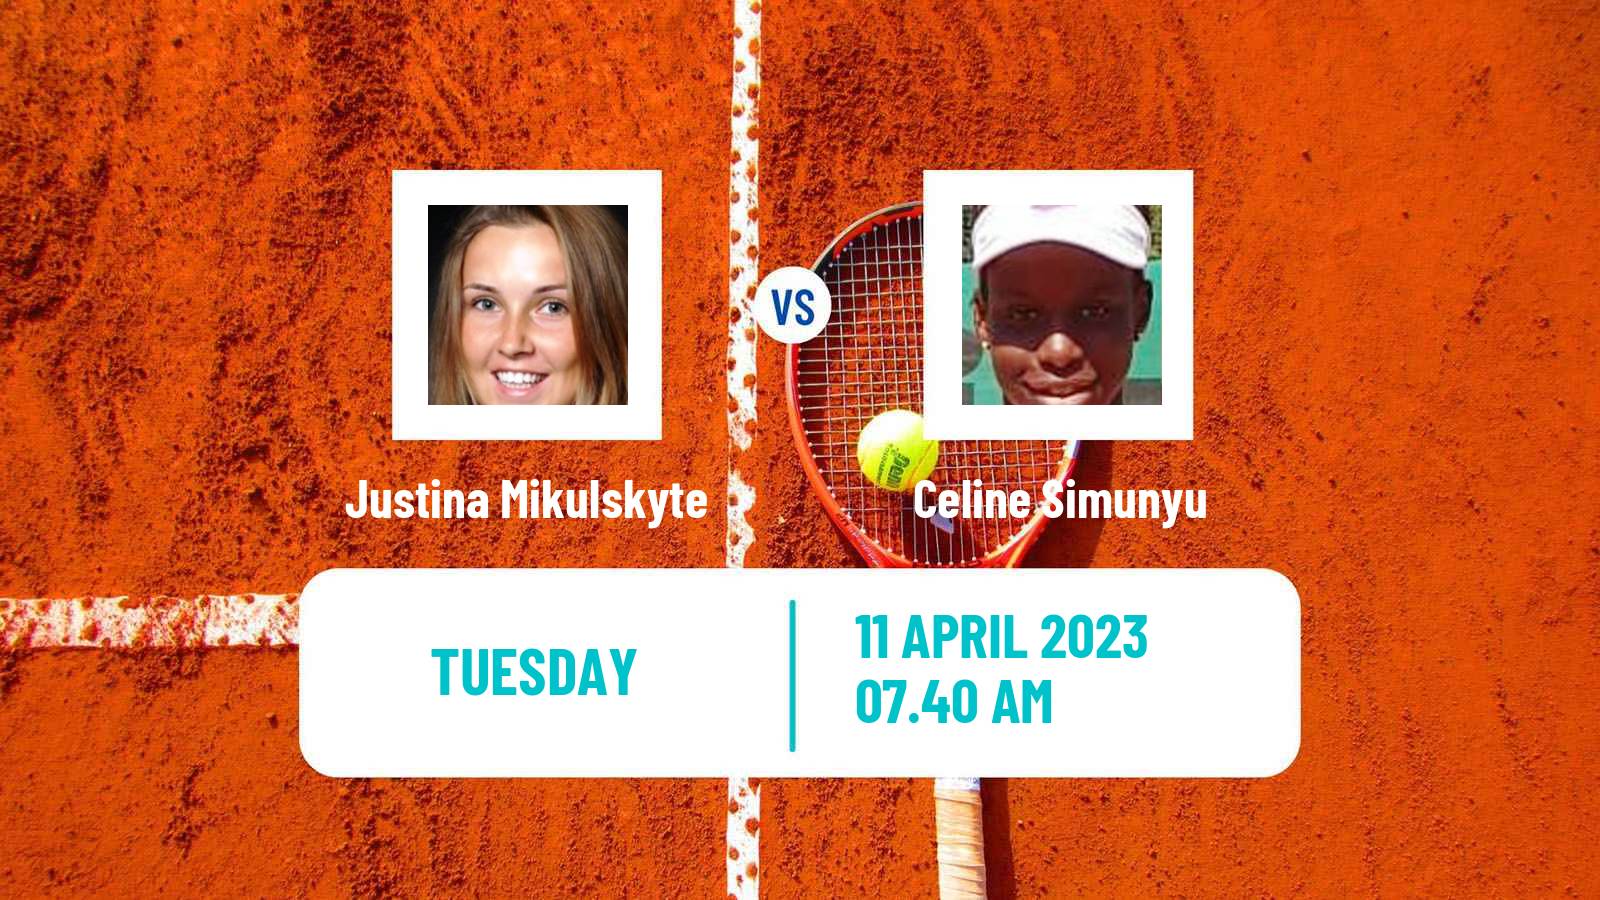 Tennis WTA Billie Jean King Cup Group II Justina Mikulskyte - Celine Simunyu